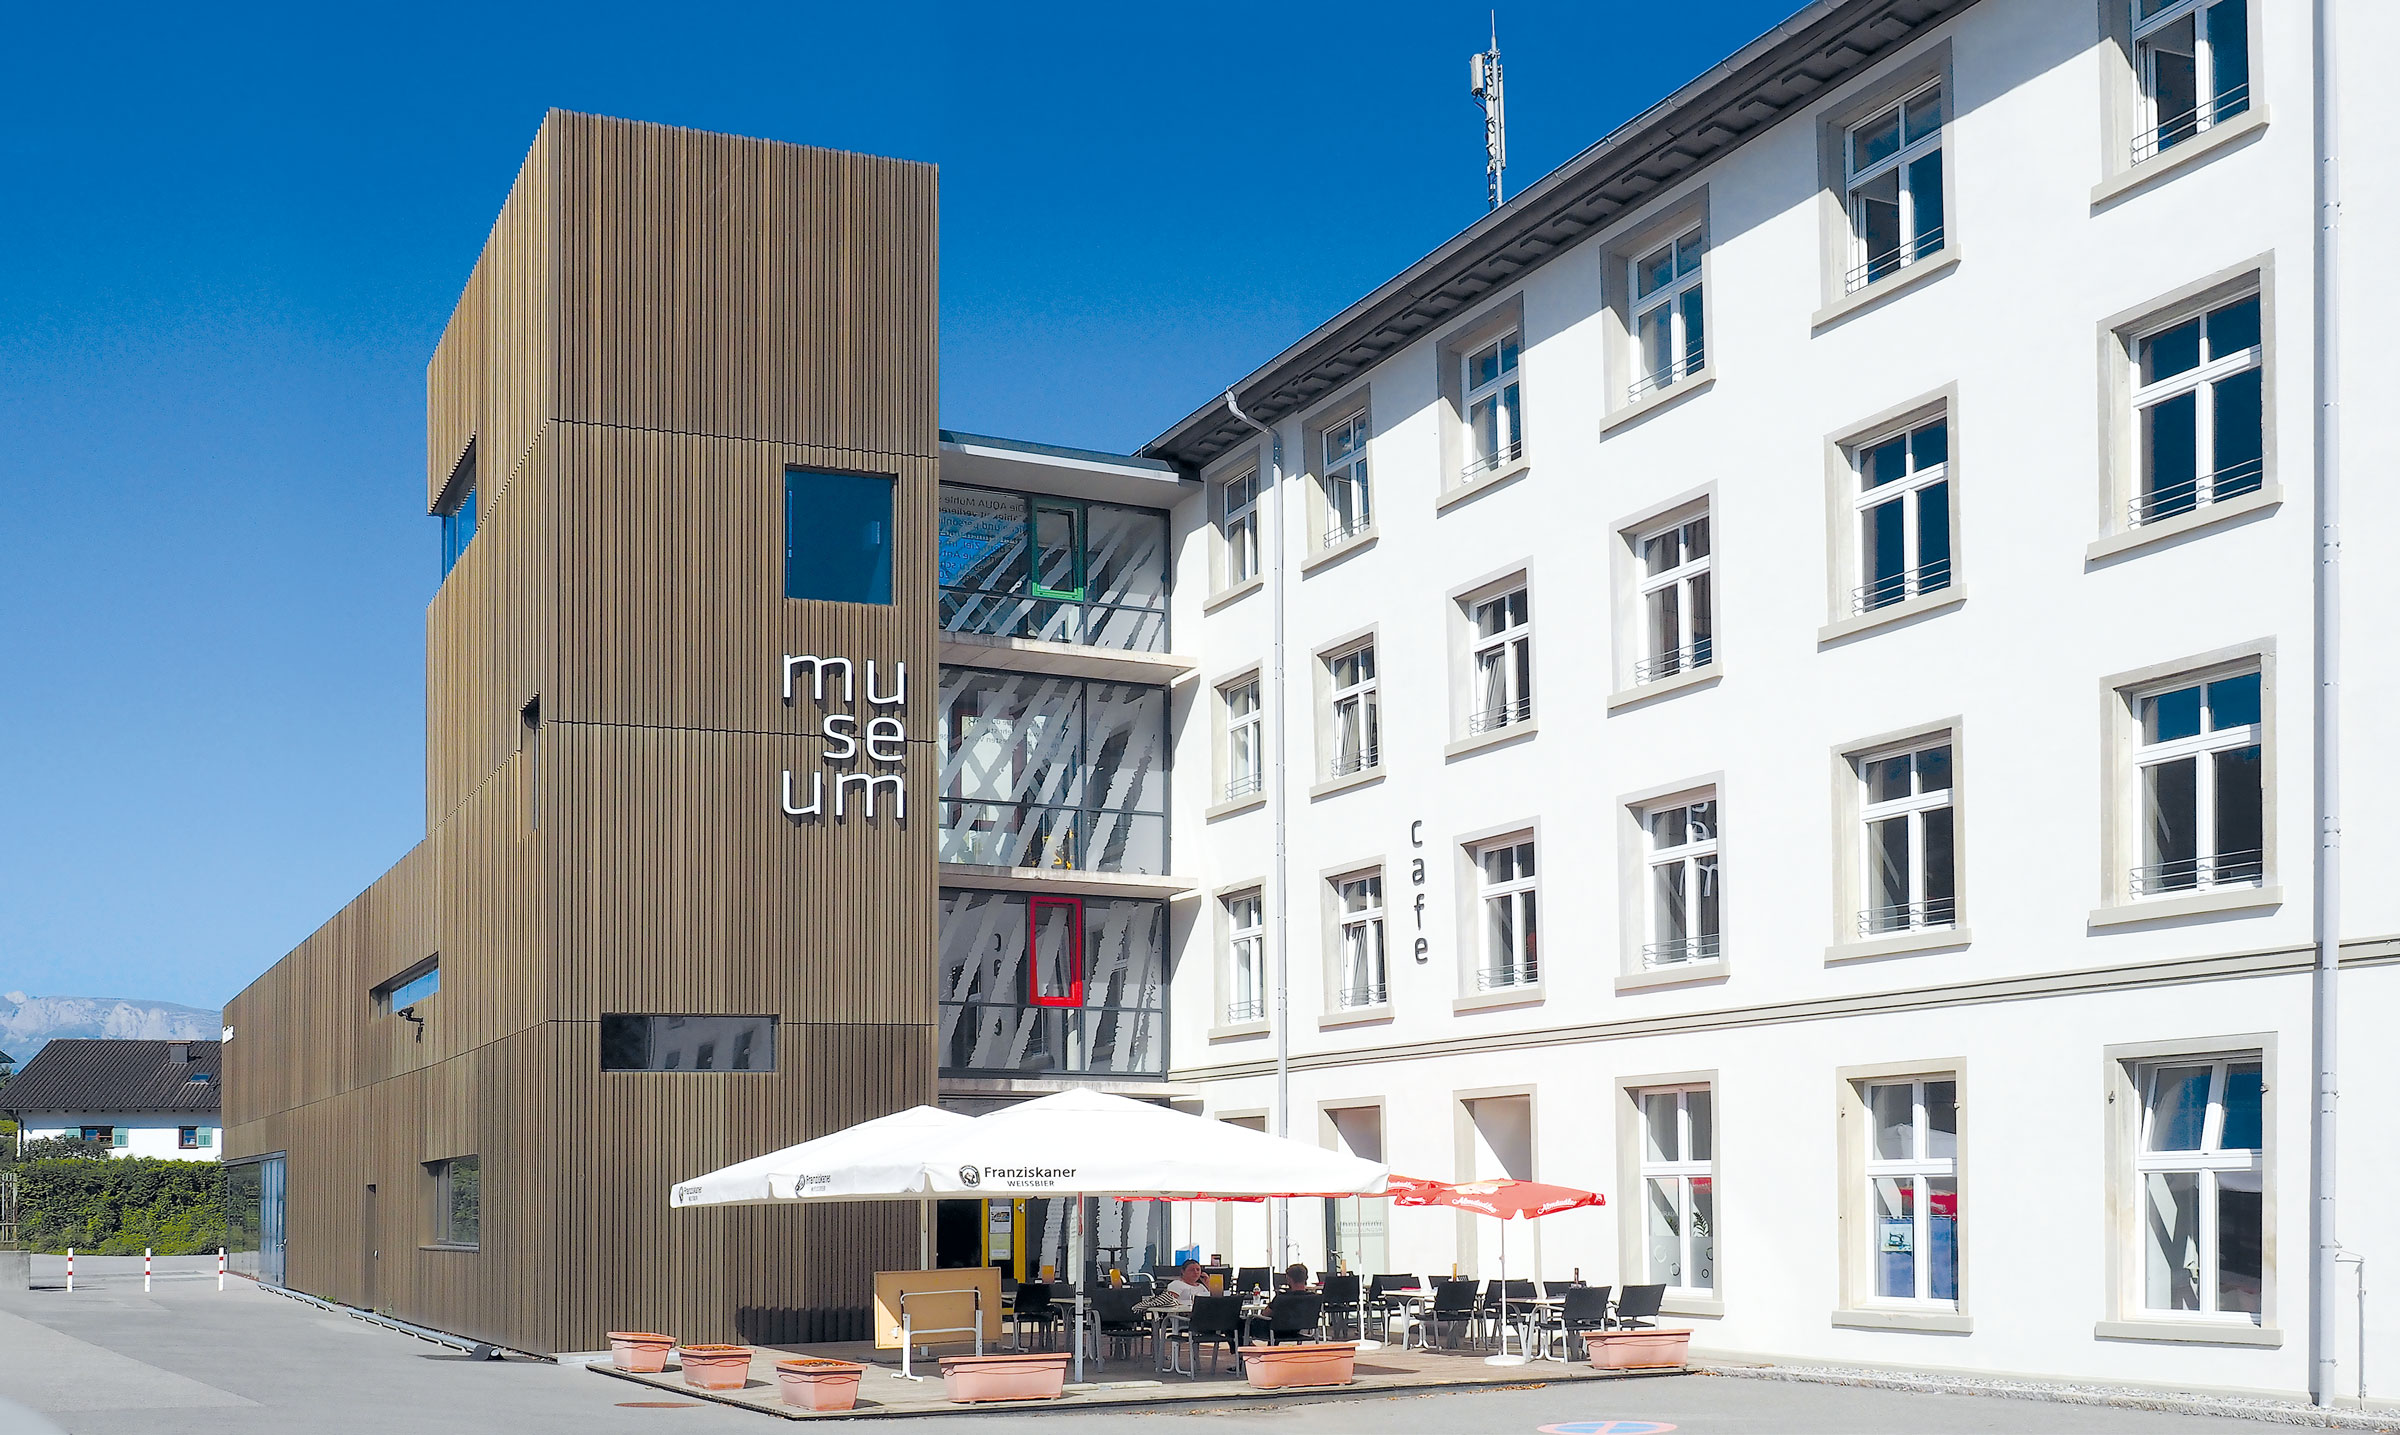 Vorarlberger Museumswelt